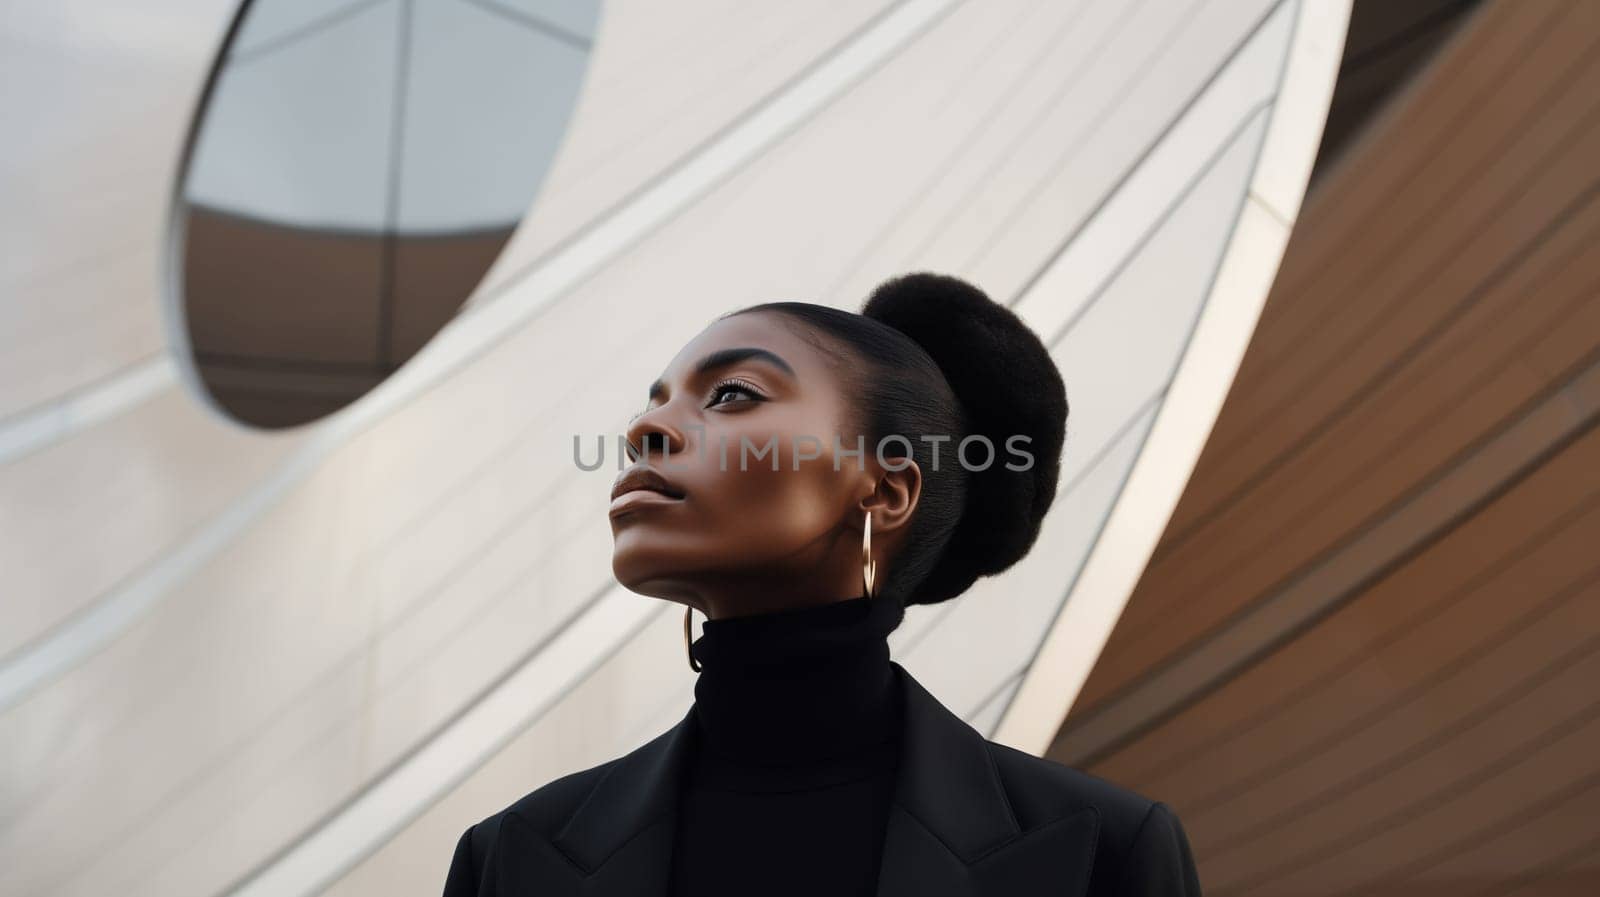 Fashionable portrait of stylish elegant black woman against the minimalism design architecture of a modern art museum building